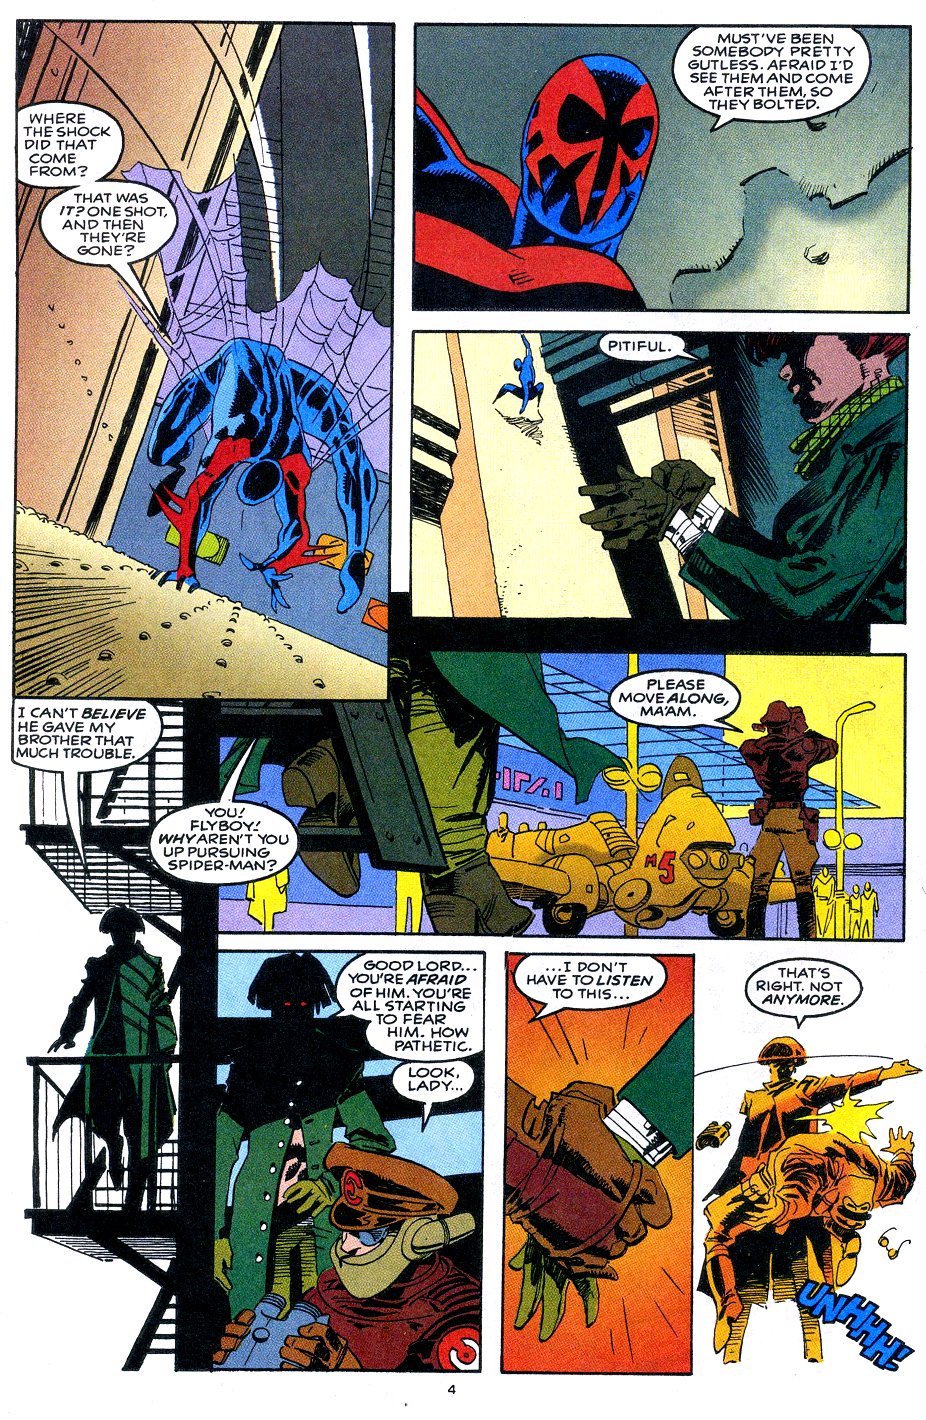 Spider-Man 2099 (1992) issue 23 - Page 4